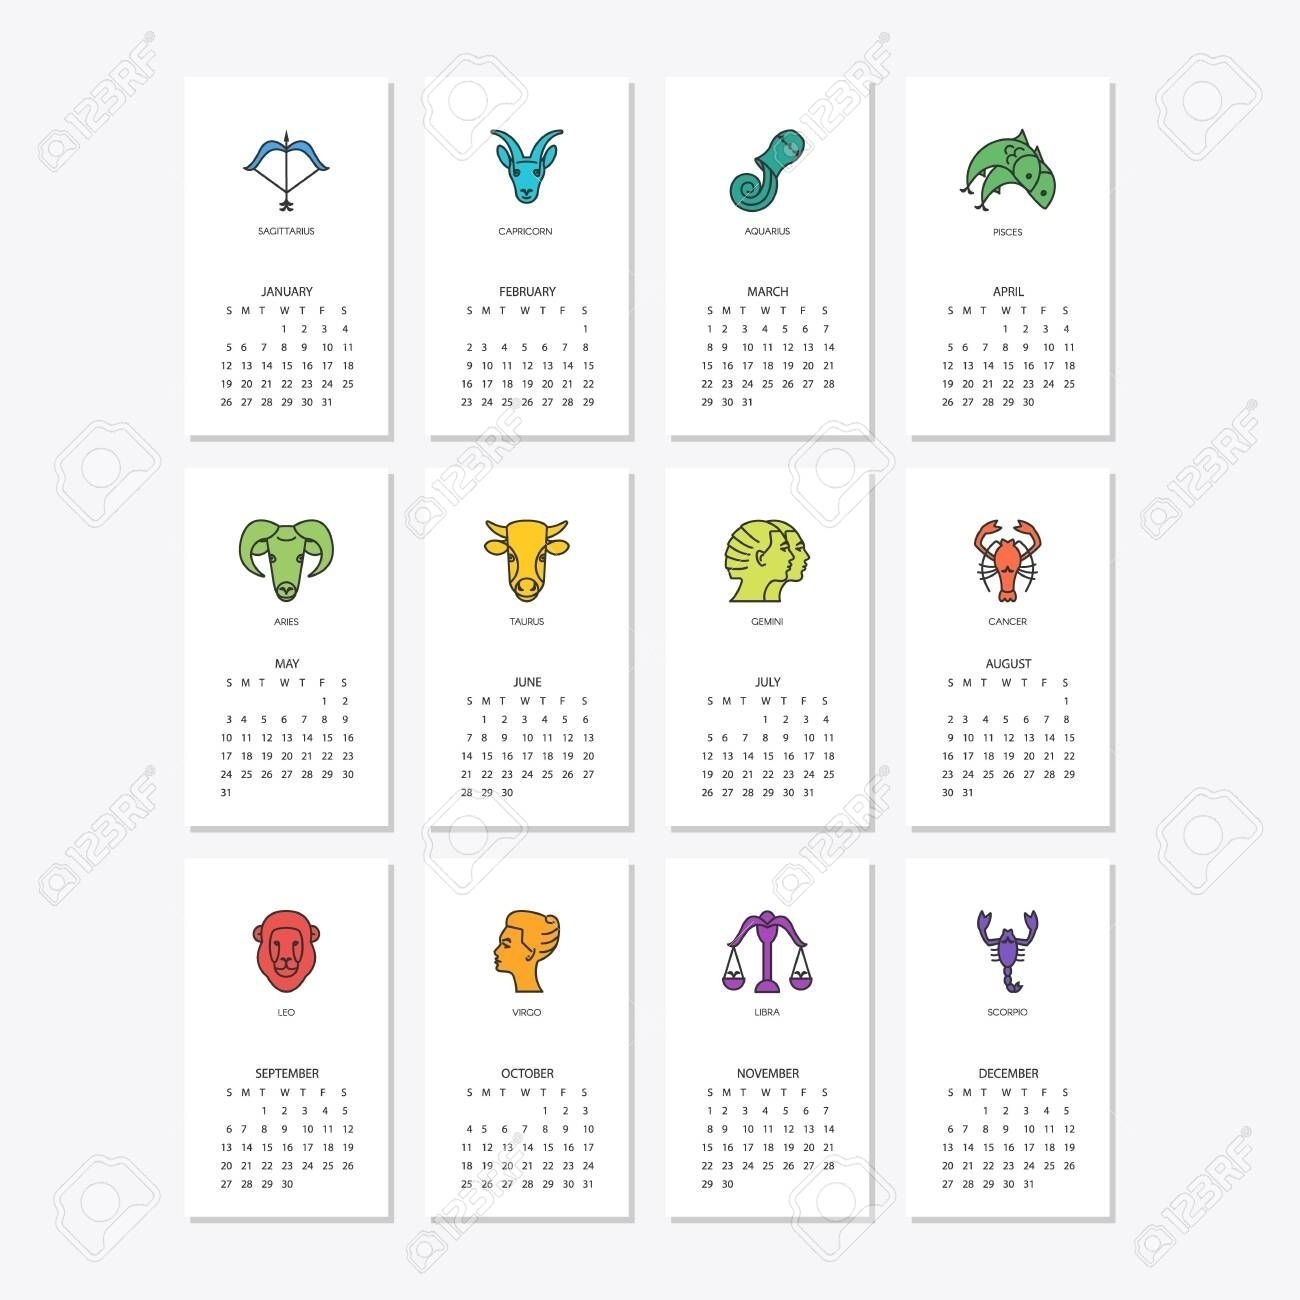 Zodiac Calendar Dates And Signs | Zodiac Signs Calendar Zodiac Calendar 13 Signs